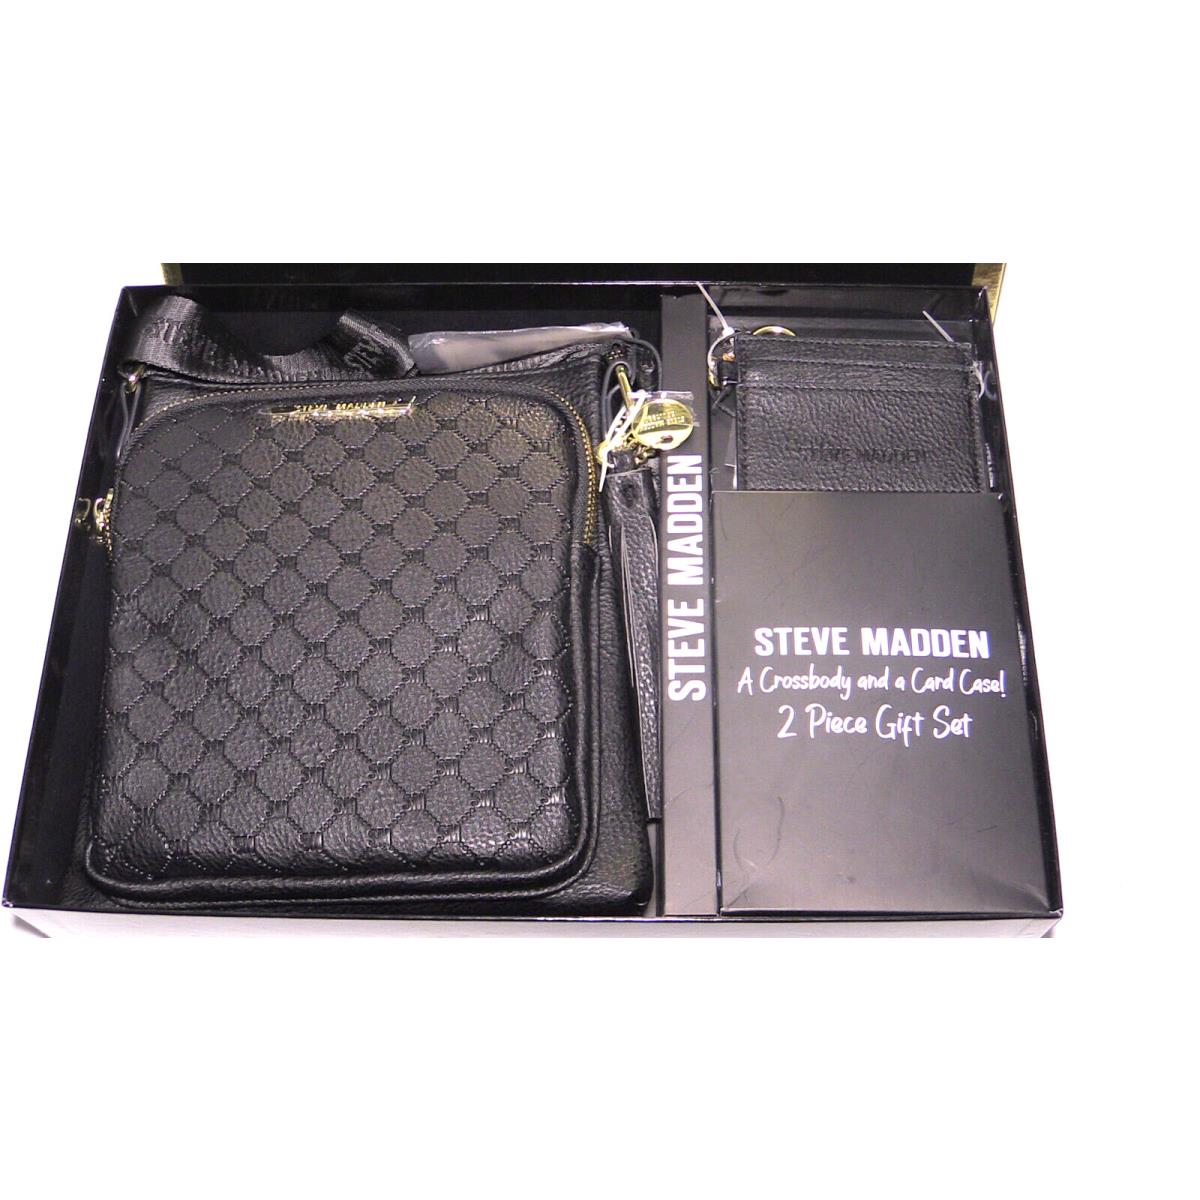 Steve Madden Crossbody Purse Bag Wallet Card Case 2 Piece Gift Set Black Tas  - Steve Madden bag 